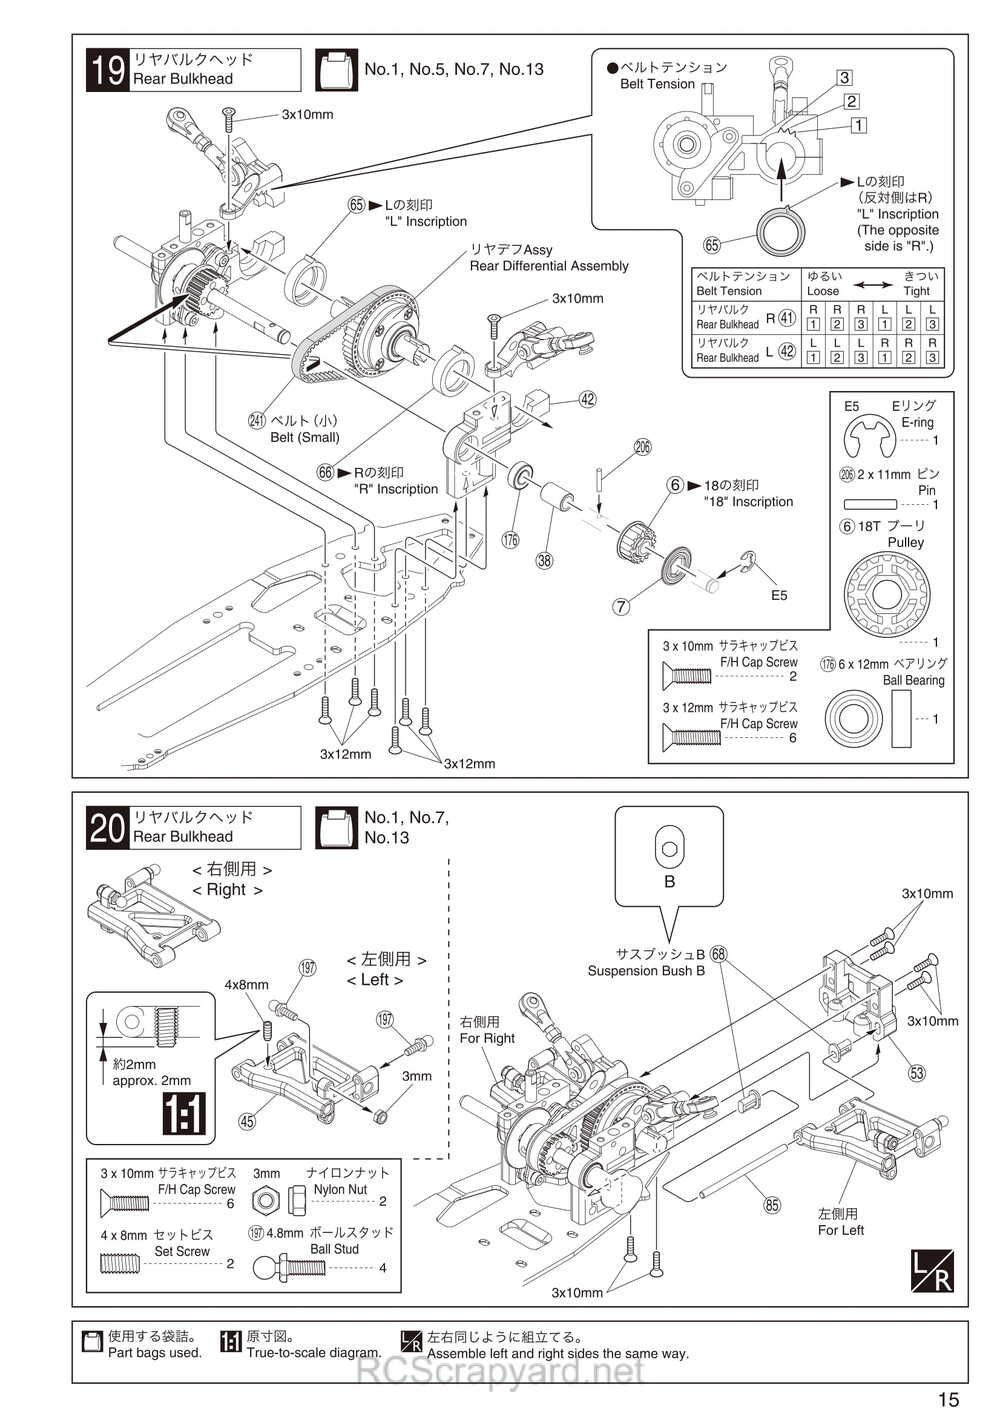 Kyosho - 31263 - V-One RRR Evo2 WC - Manual - Page 15